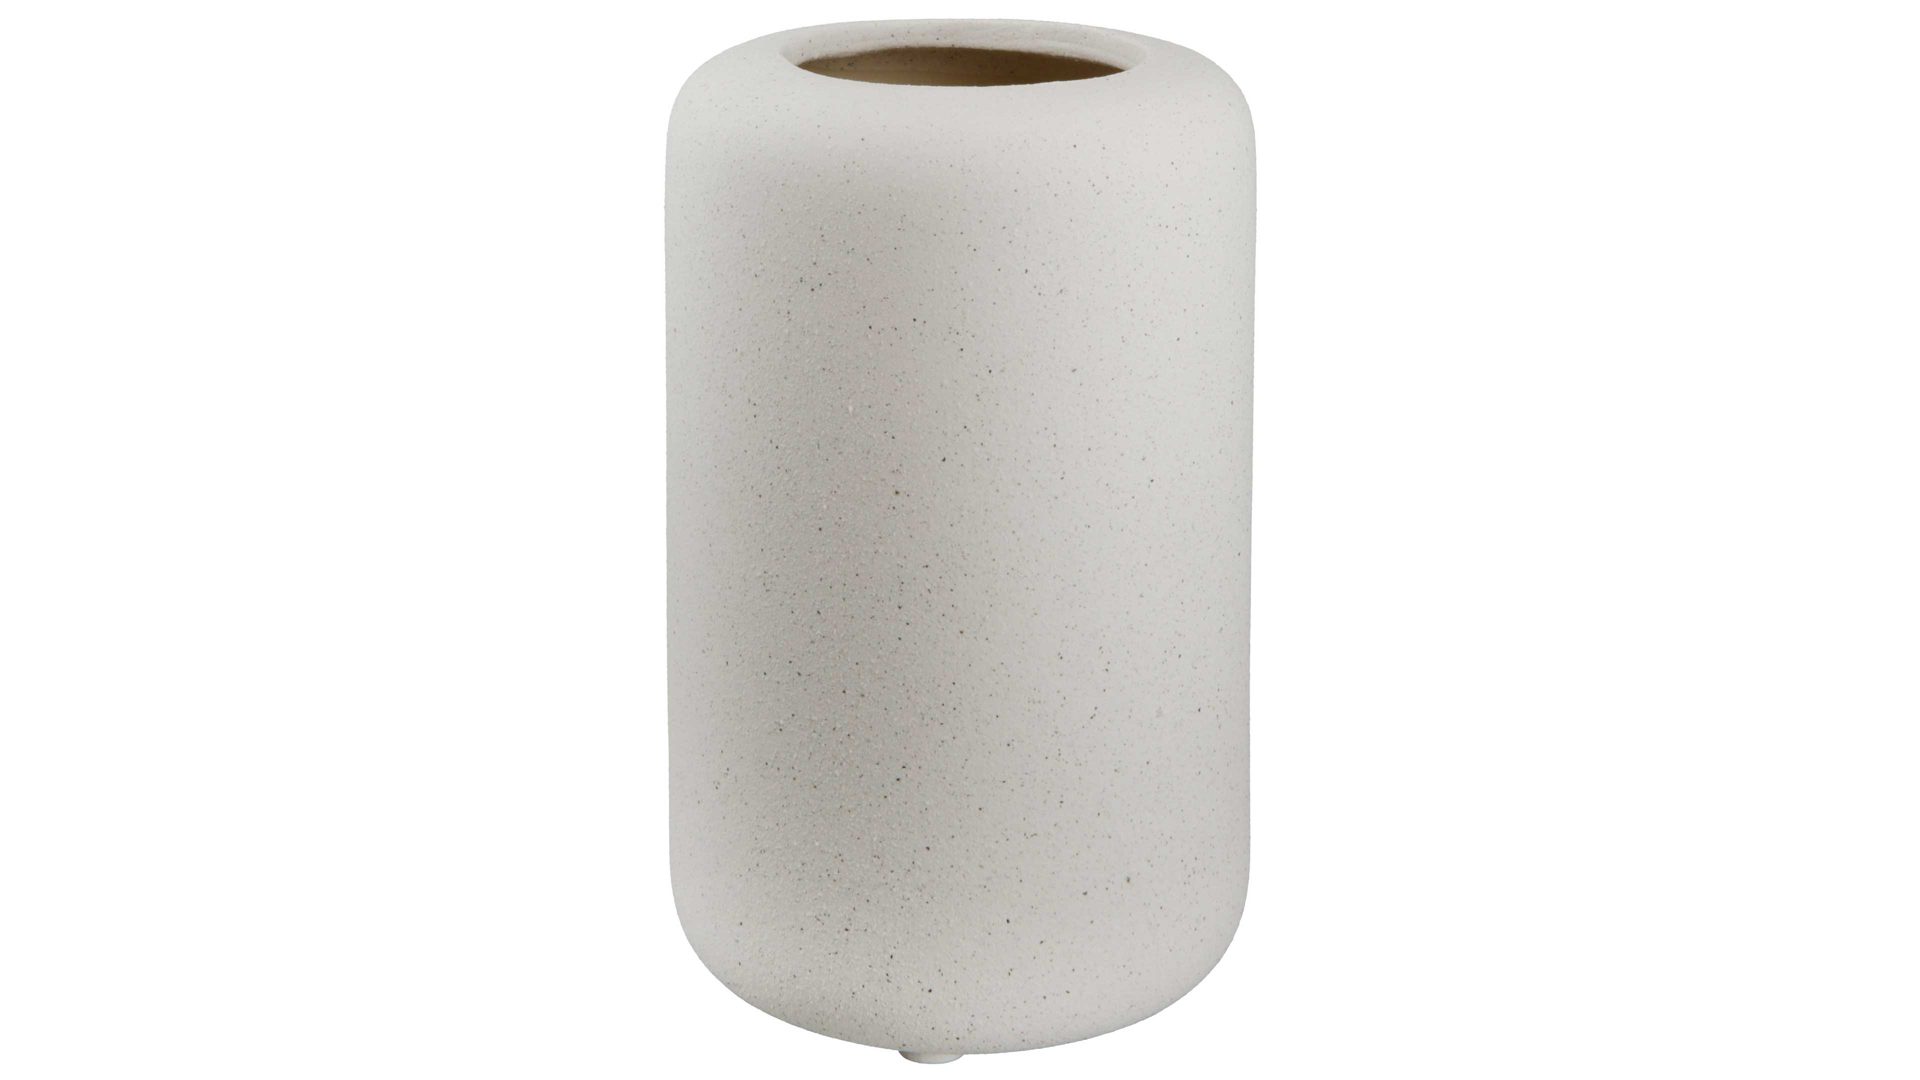 Vase Interliving BEST BUDDYS! aus Keramik in Weiß Interliving BEST BUDDYS! Vase Sabbia weiße Keramik - Höhe ca. 22 cm